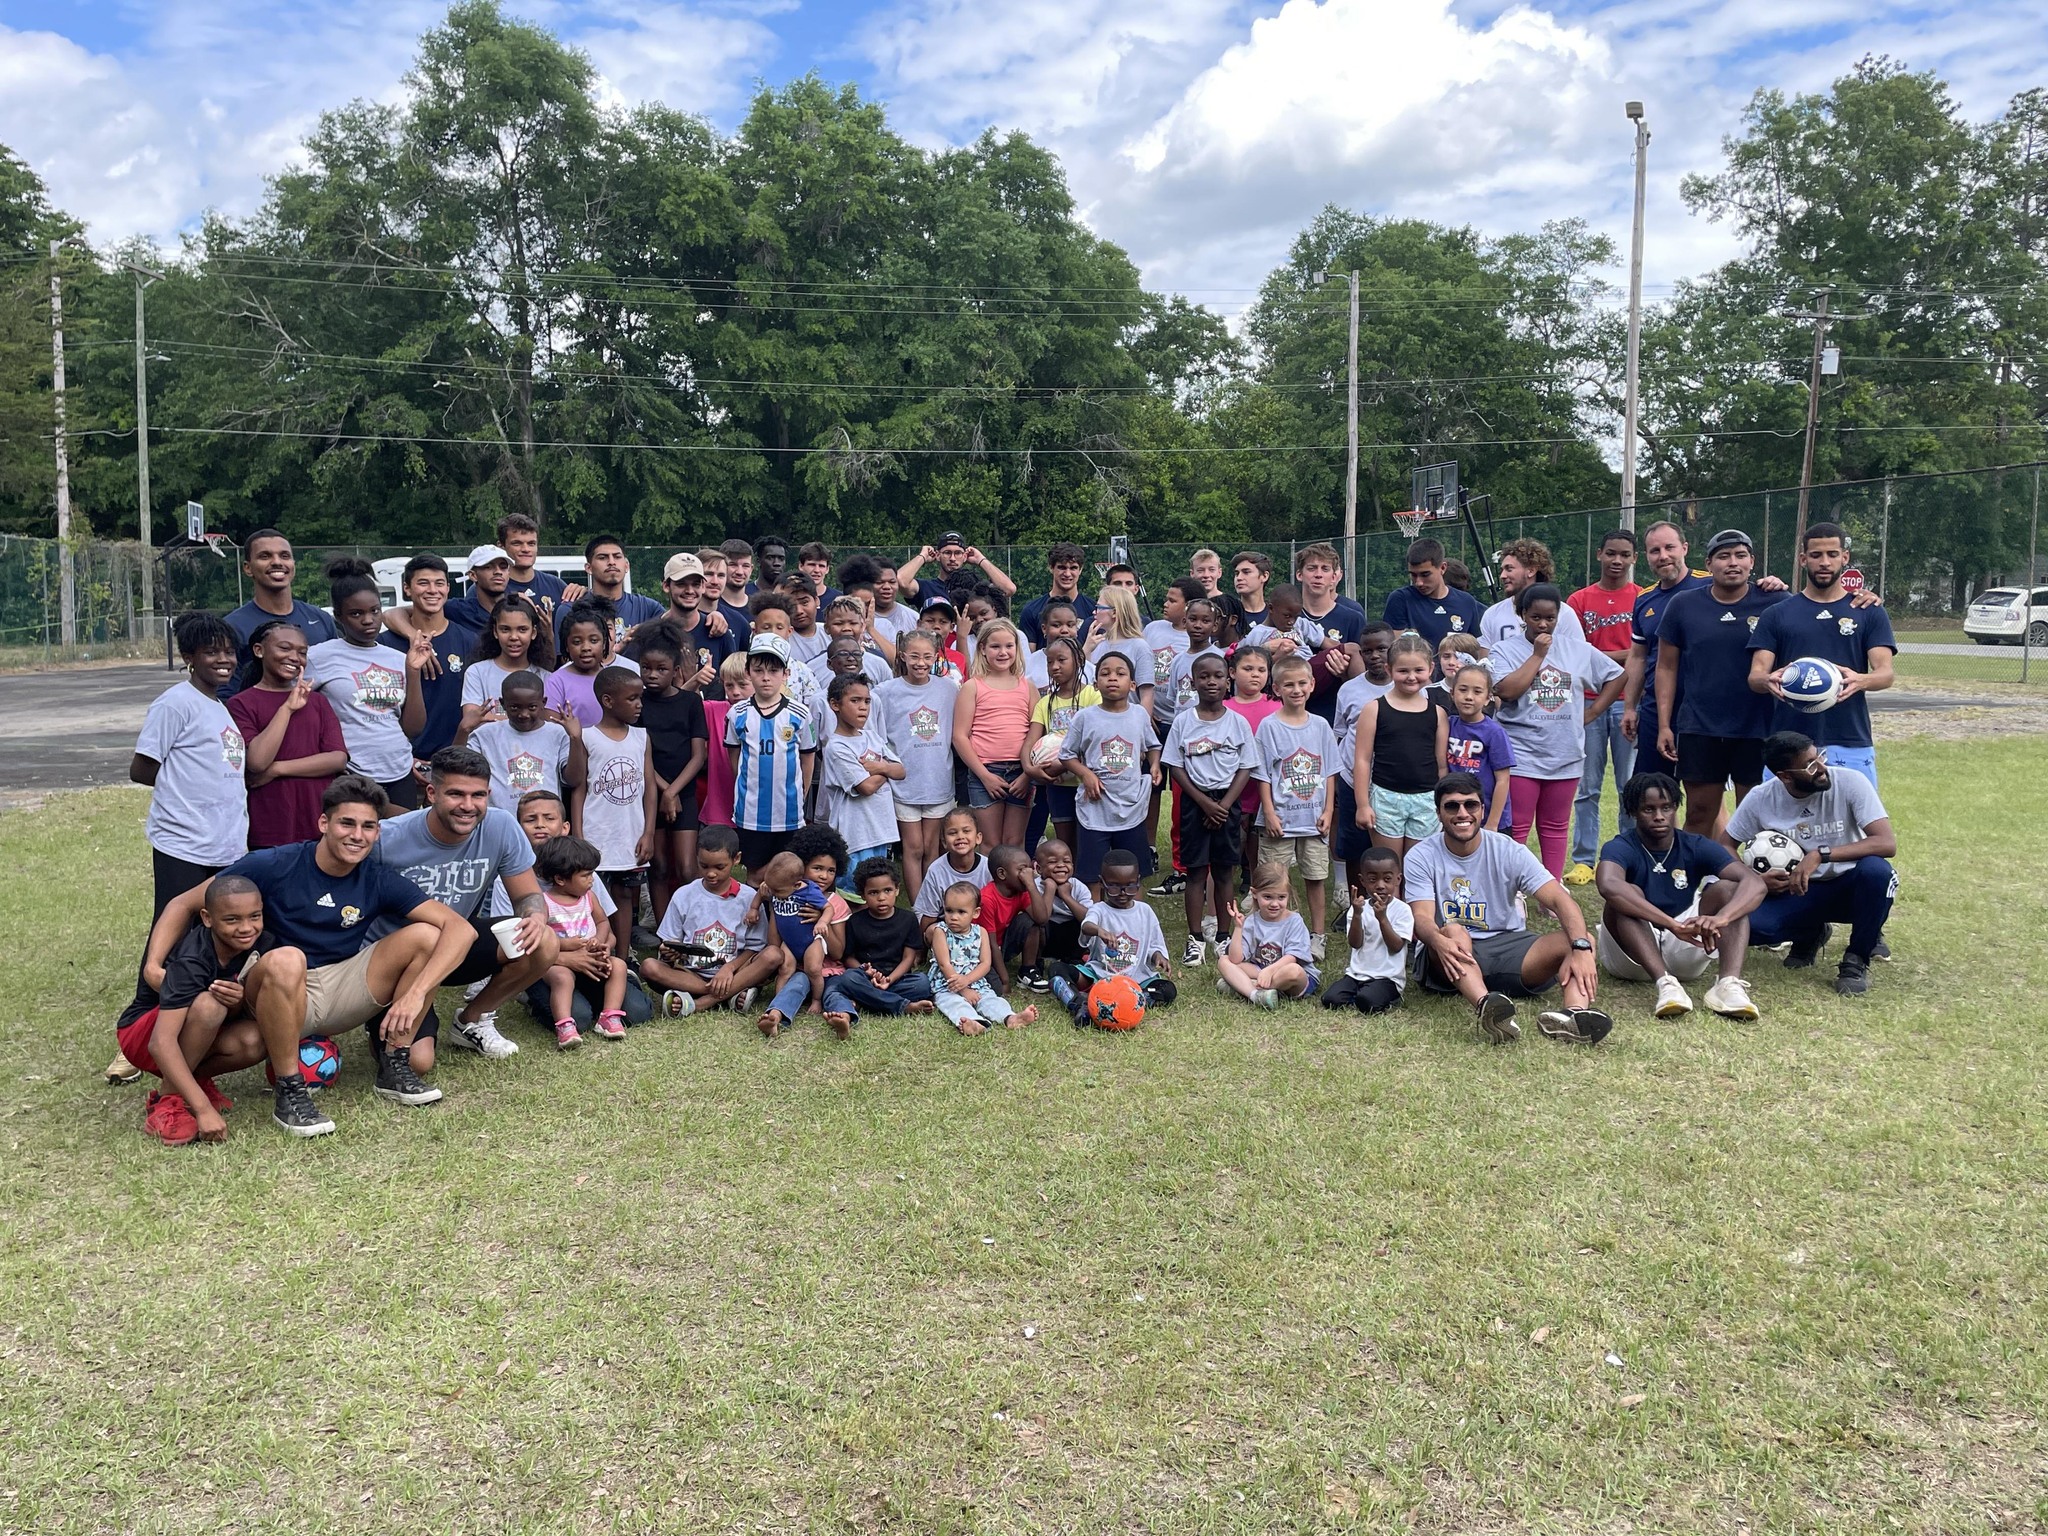 Blackville Church Reaching the Community through Soccer